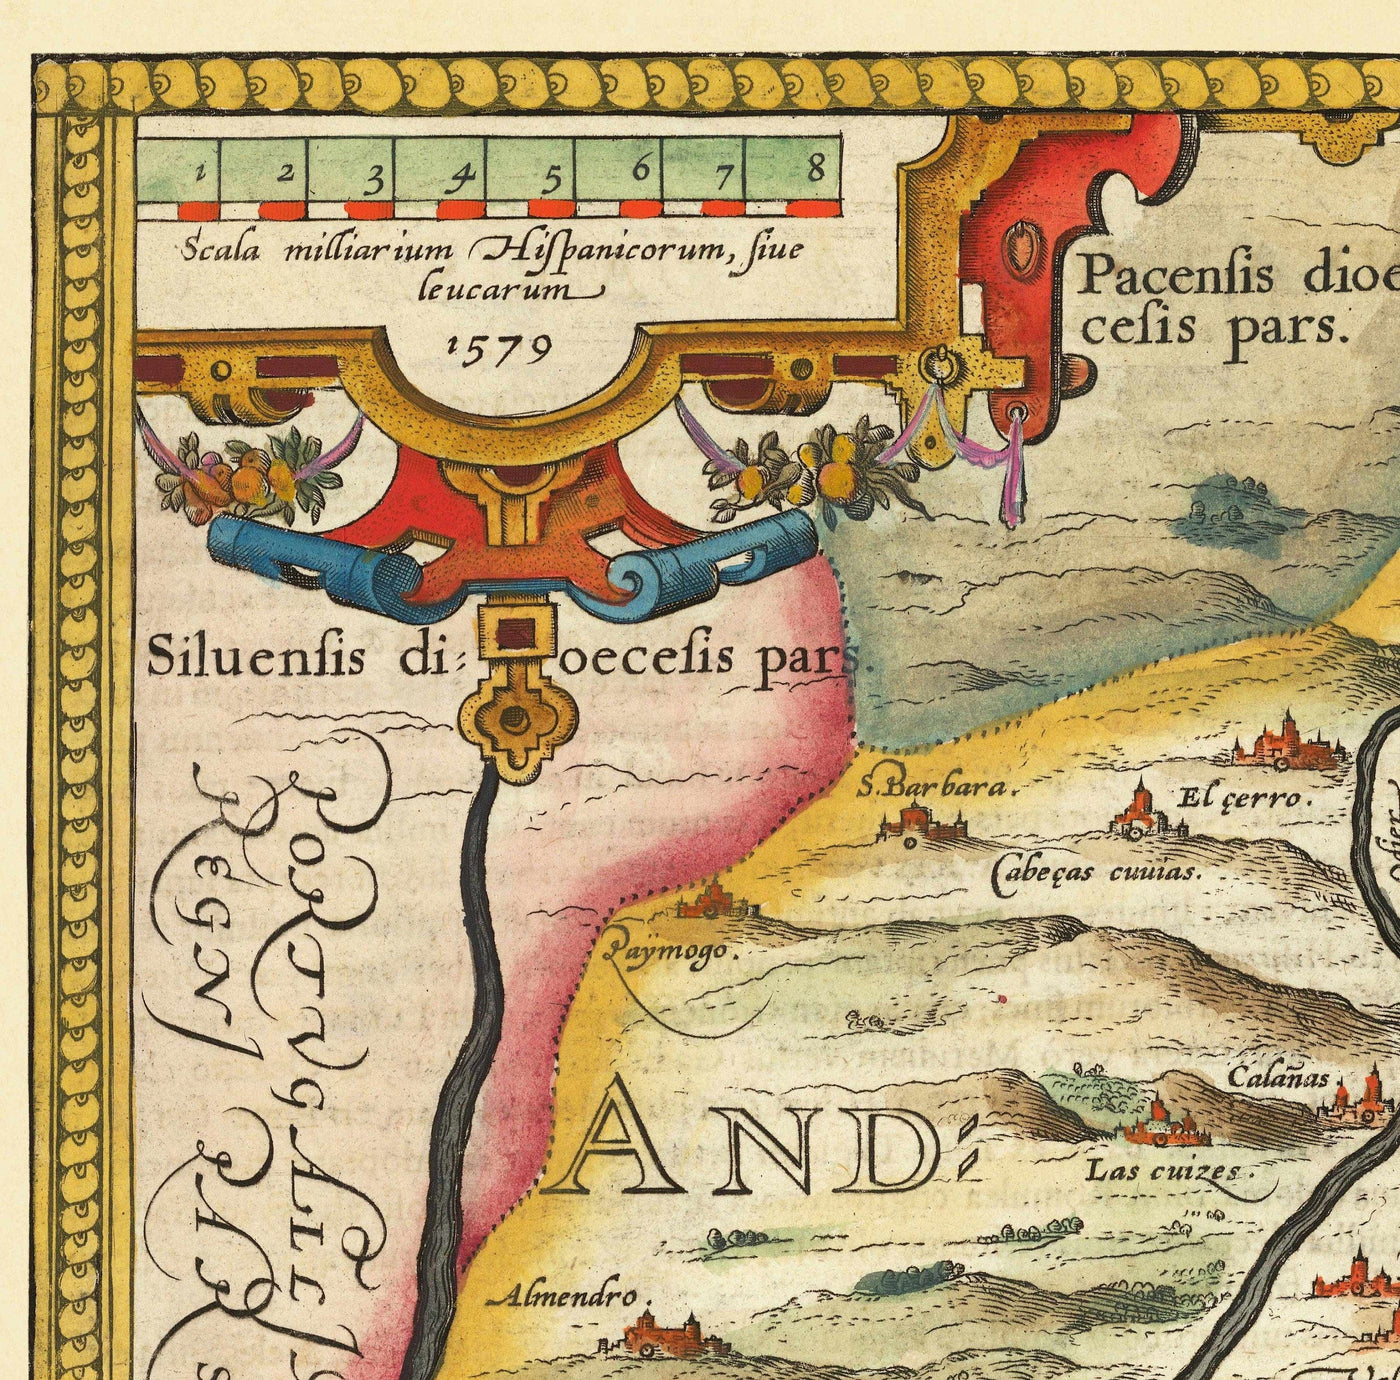 Ancienne carte d'Andalousie, Séville, Espagne par Ortelius en 1573 - Sevilla, Huelva, Cadiz, Barrameda, Santa María, Real